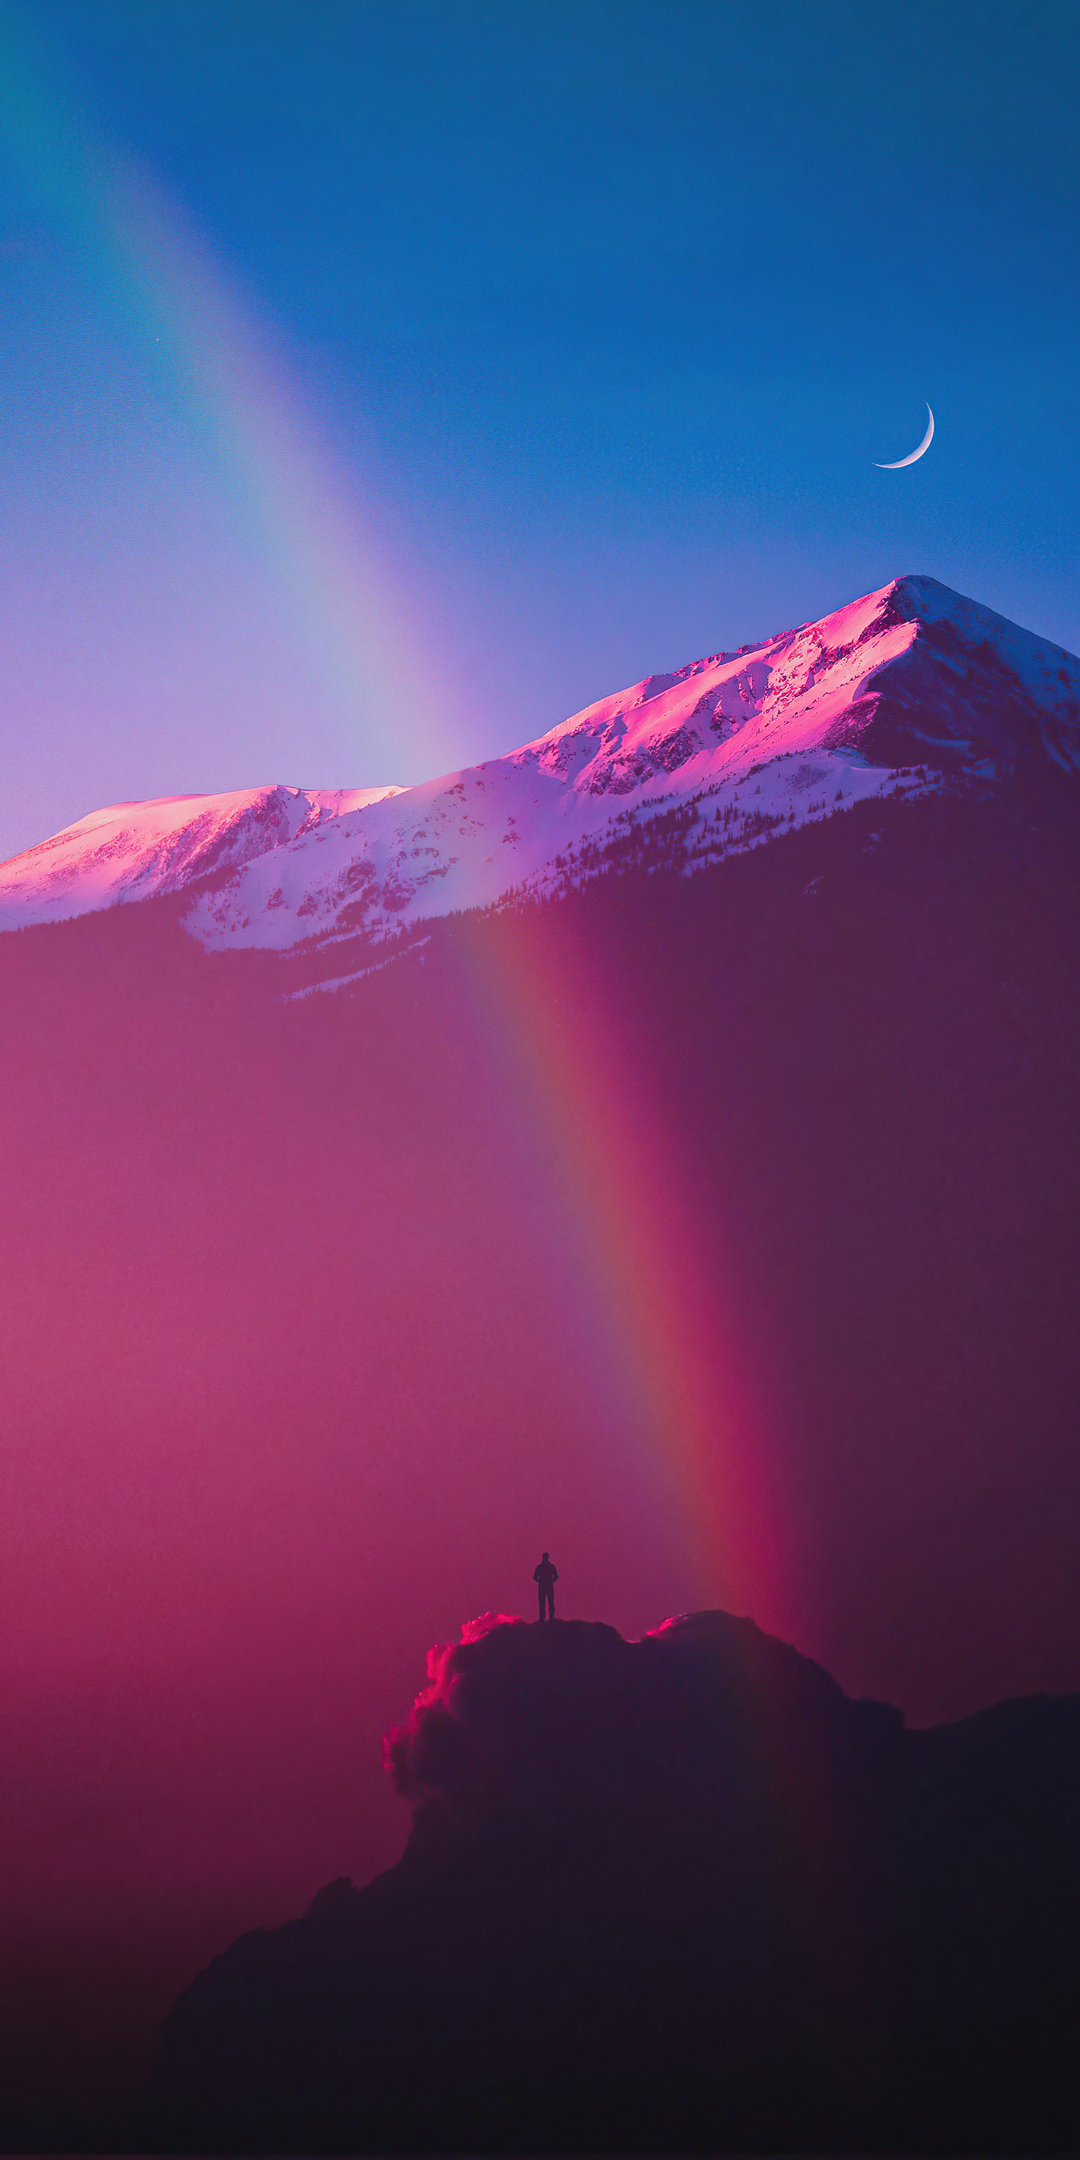 me-under-rainbow-my.jpg